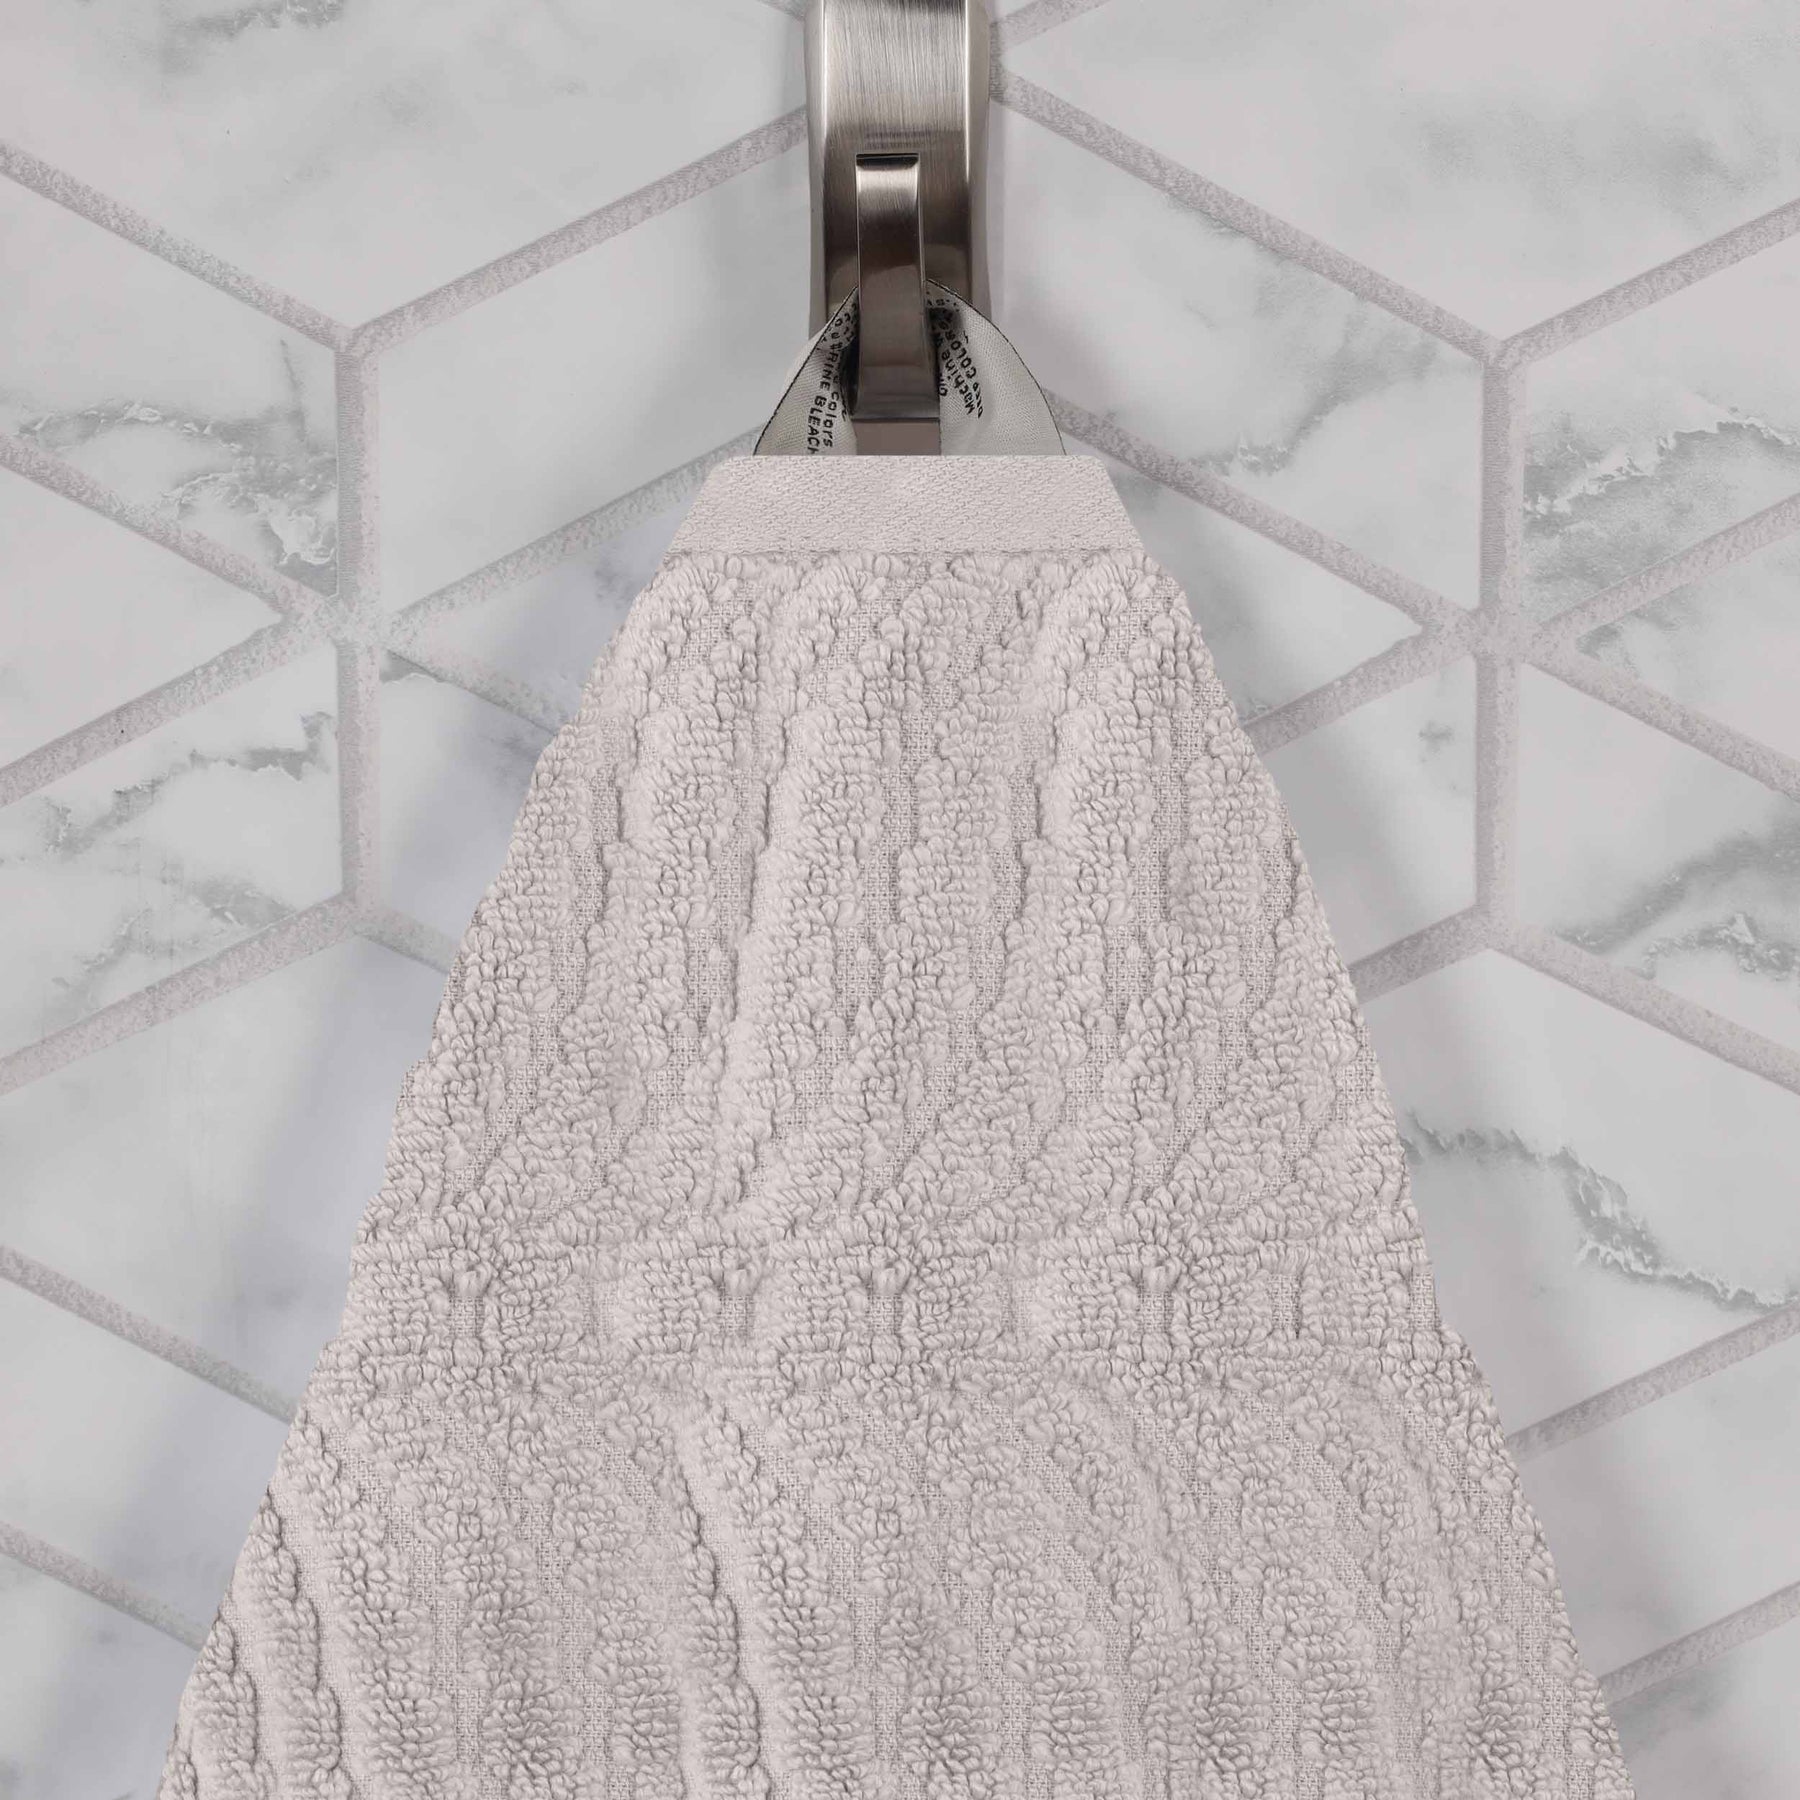 Cotton Highly Absorbent 6-Piece Jacquard Chevron Towel Set - Platinum